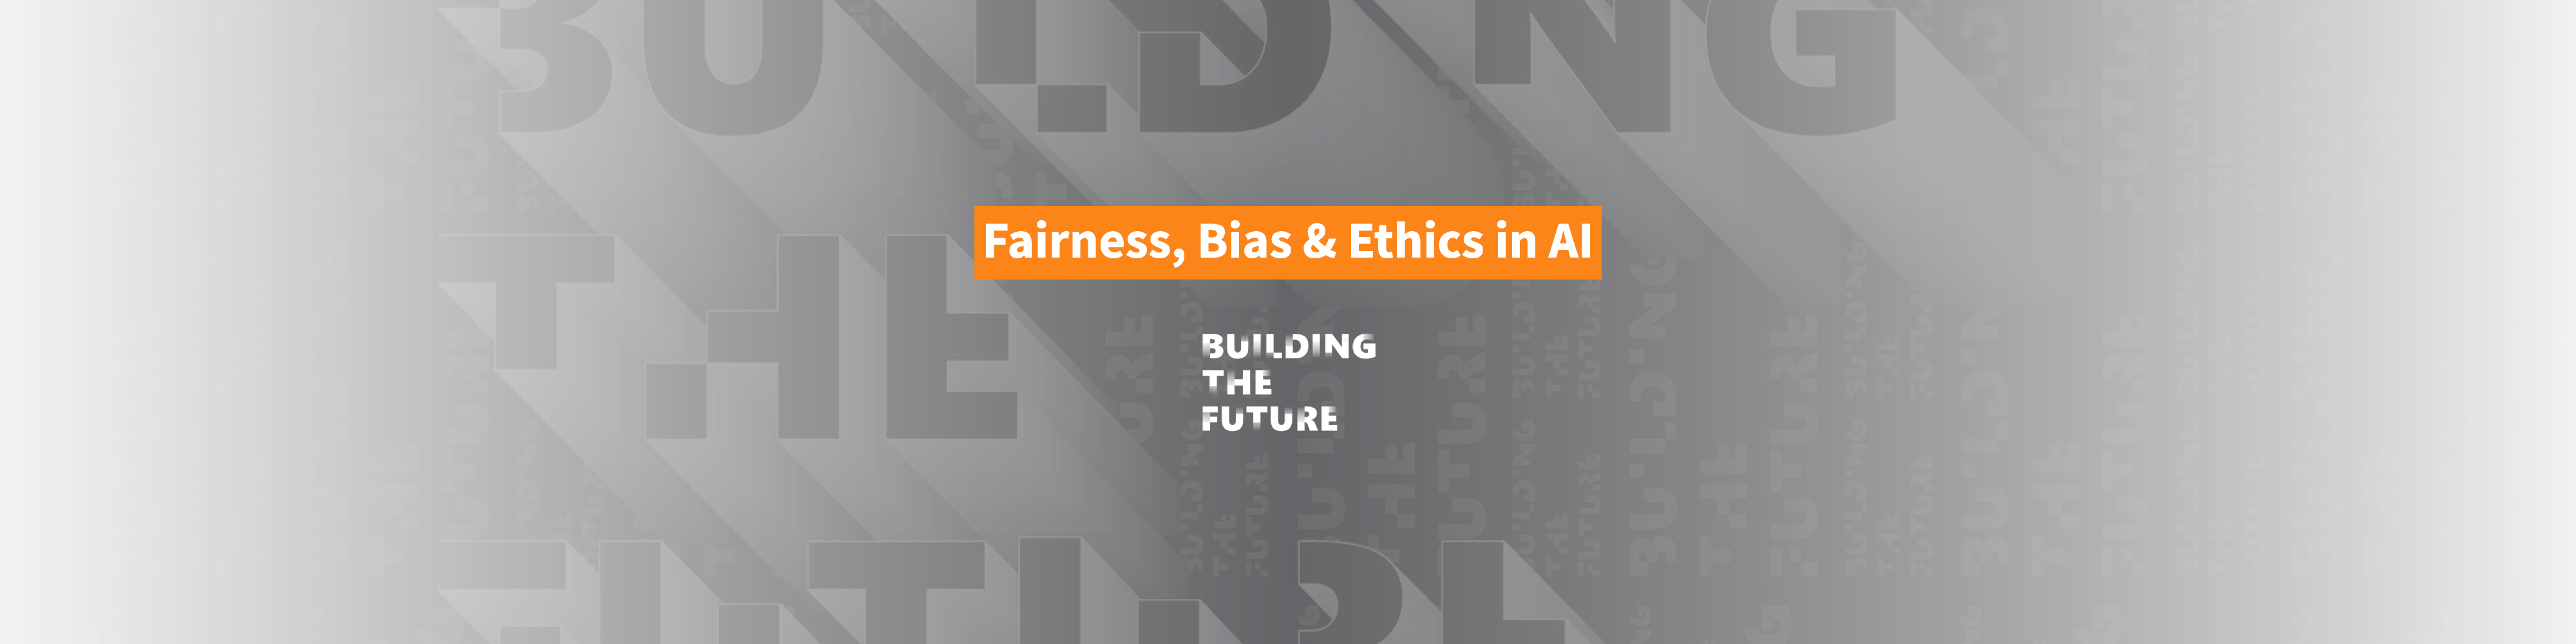 Building the Future: Fairness, Bias & Ethics in AI